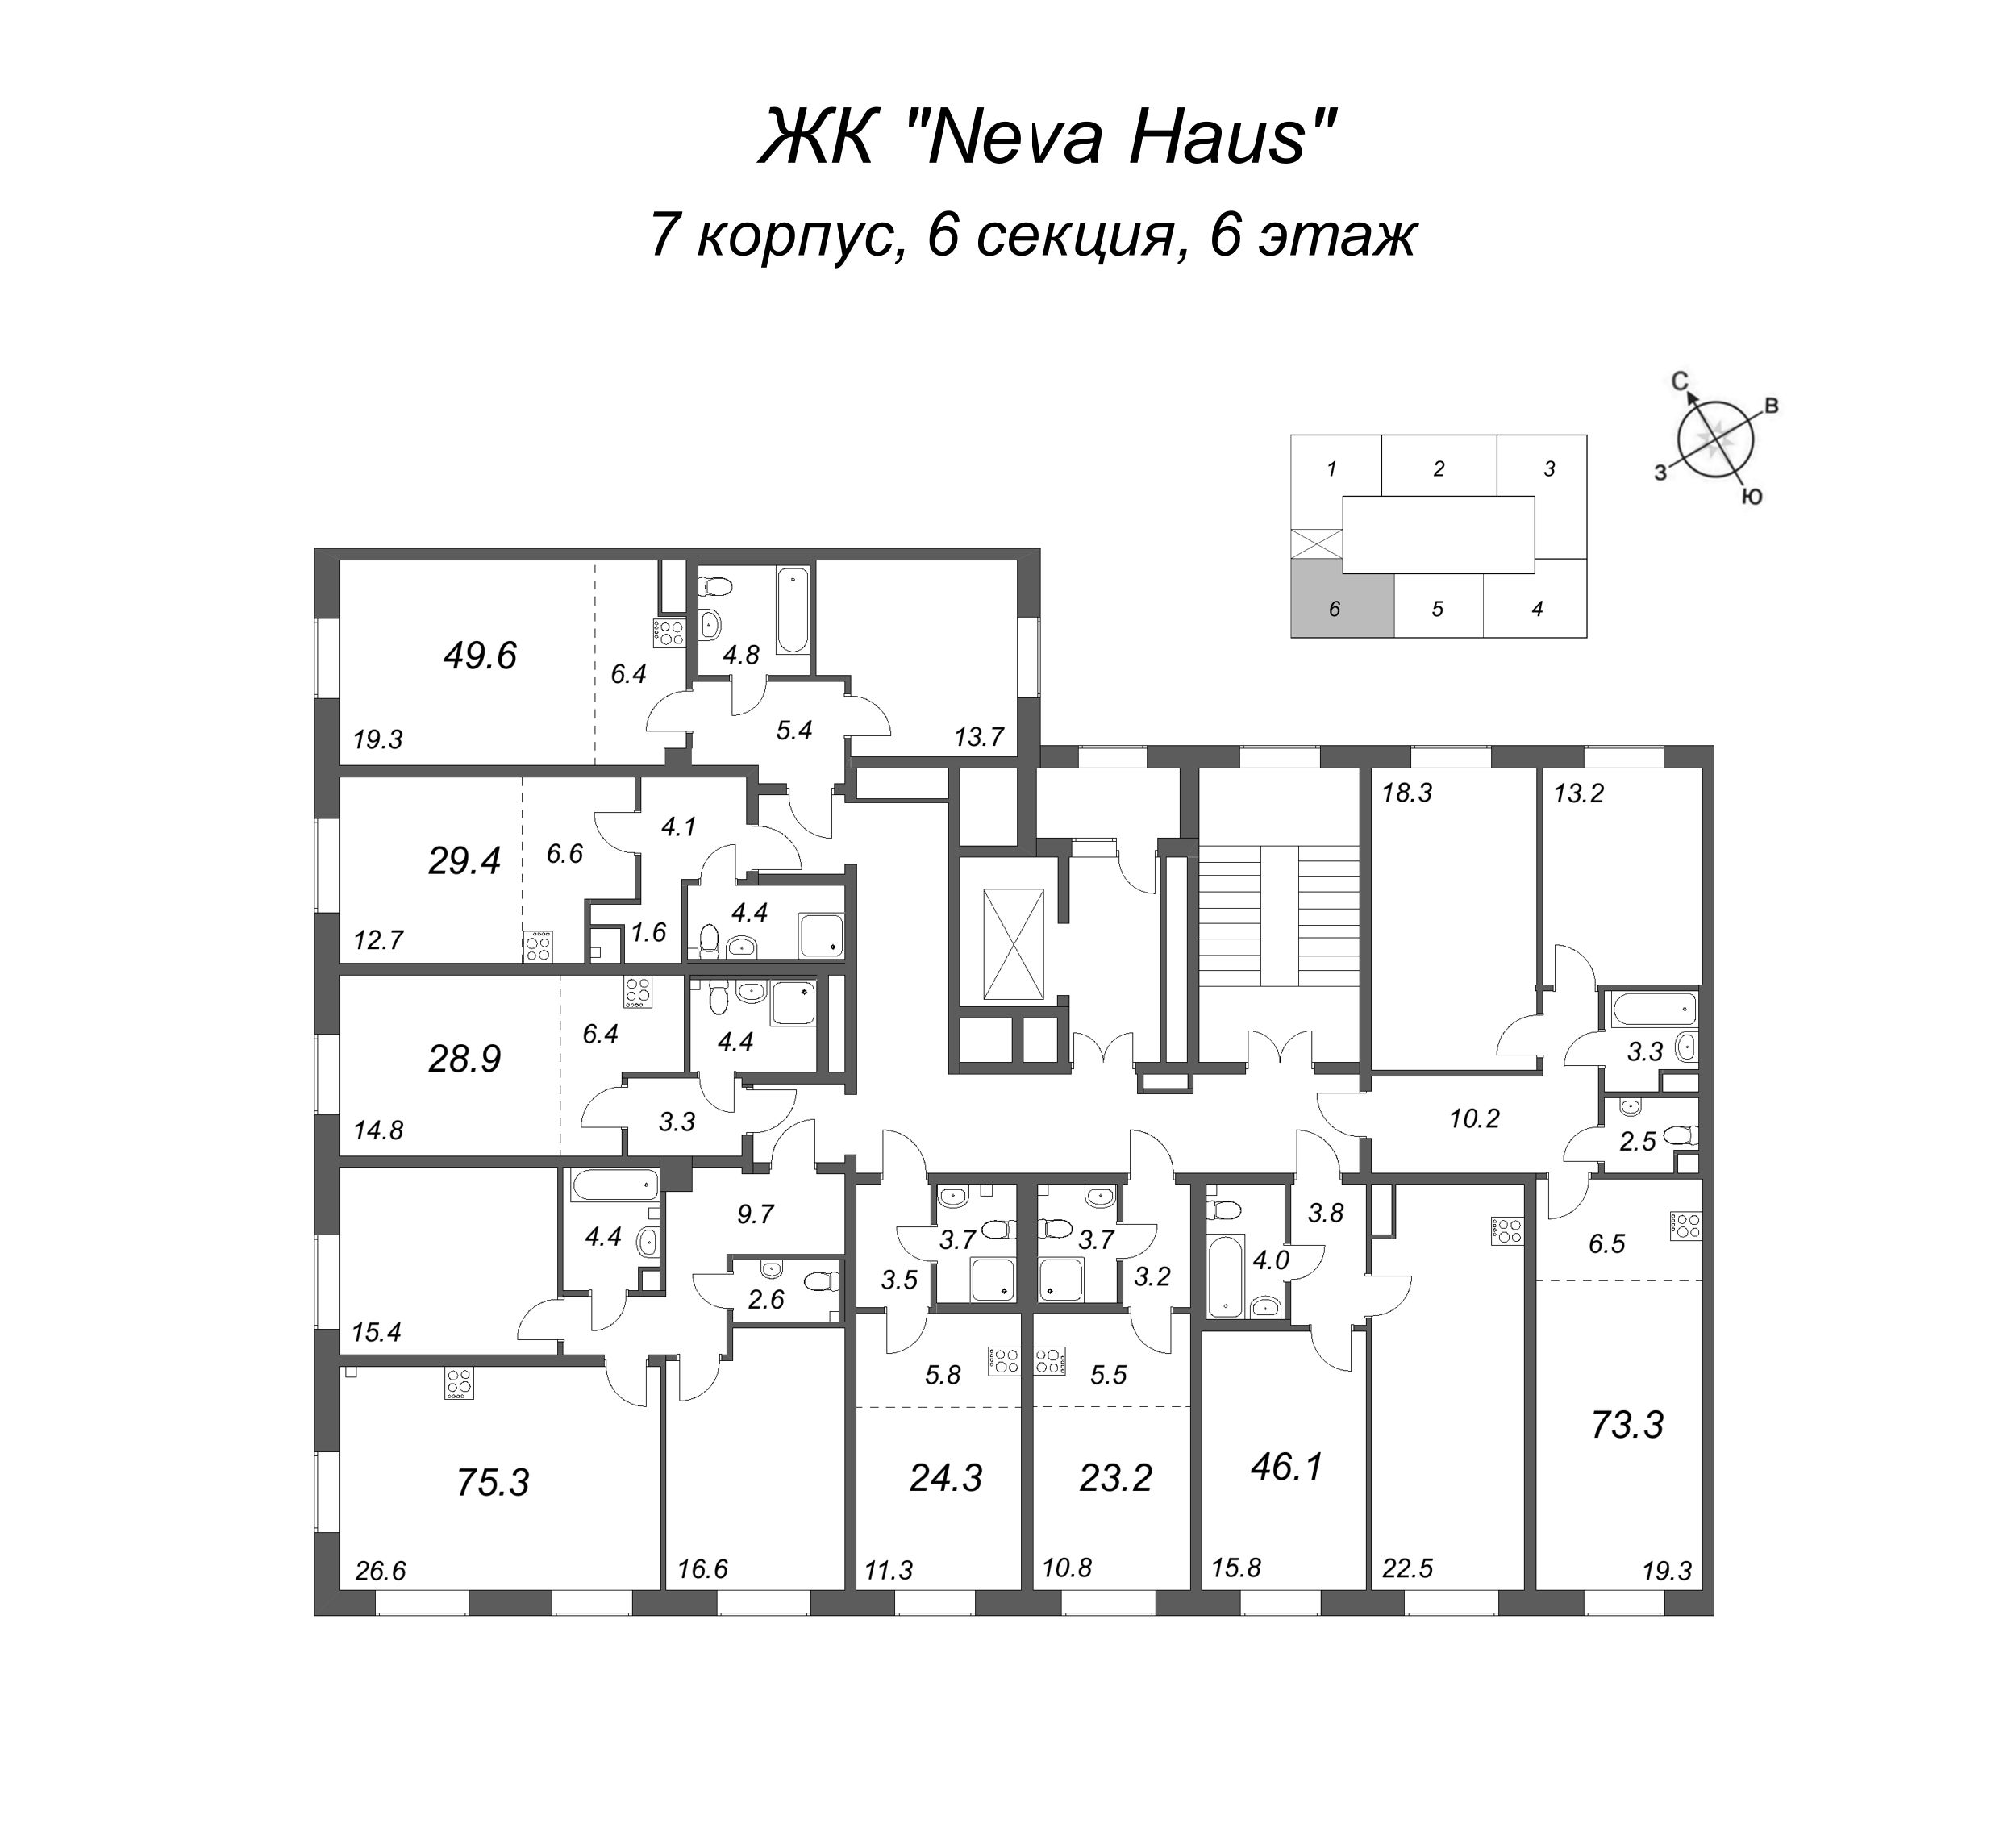 3-комнатная (Евро) квартира, 73.5 м² - планировка этажа